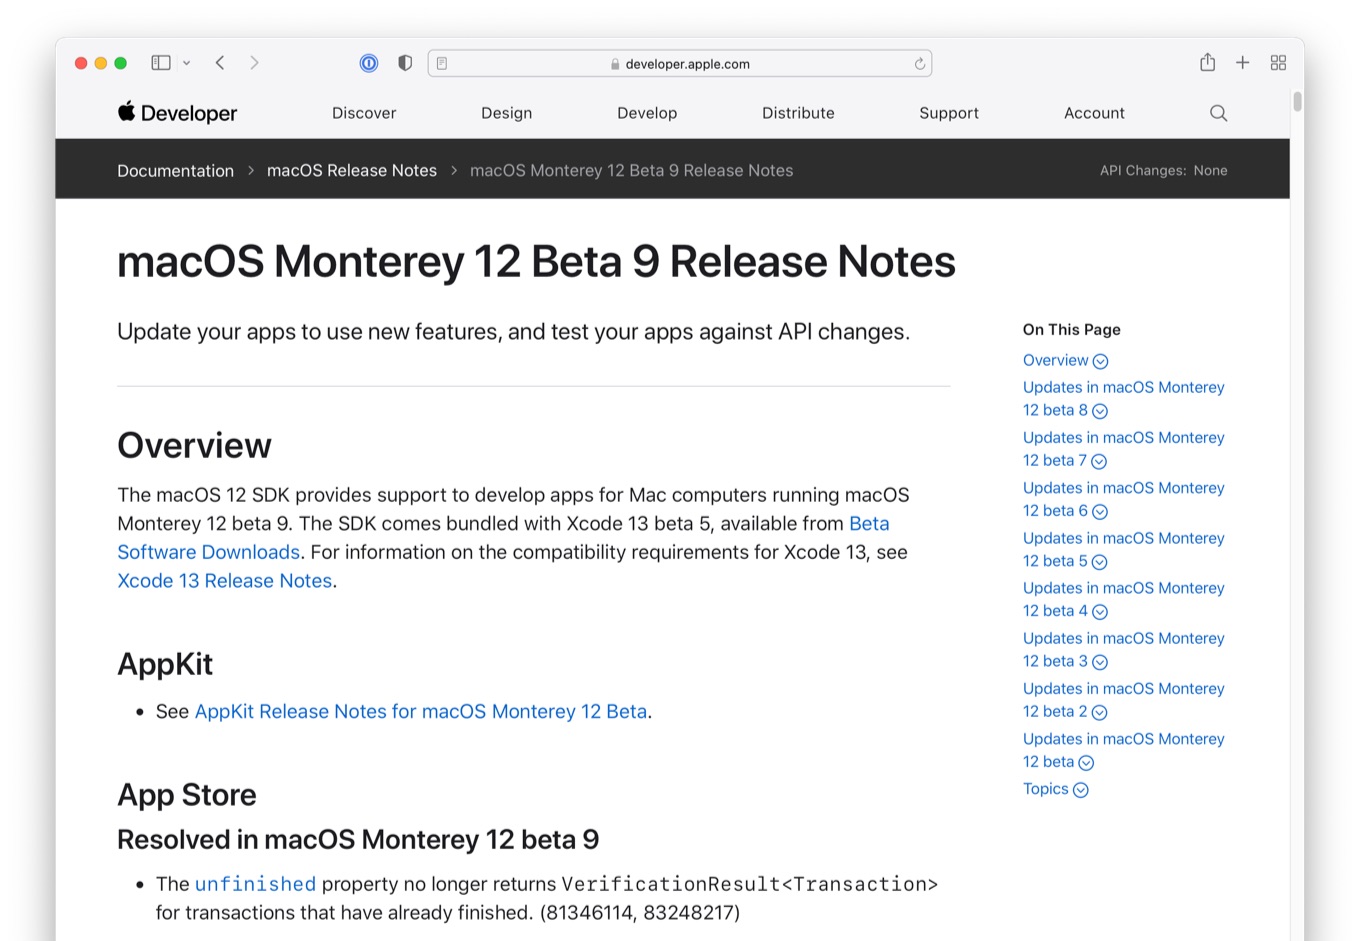 macOS Monterey 12 Beta 9 Release Notes